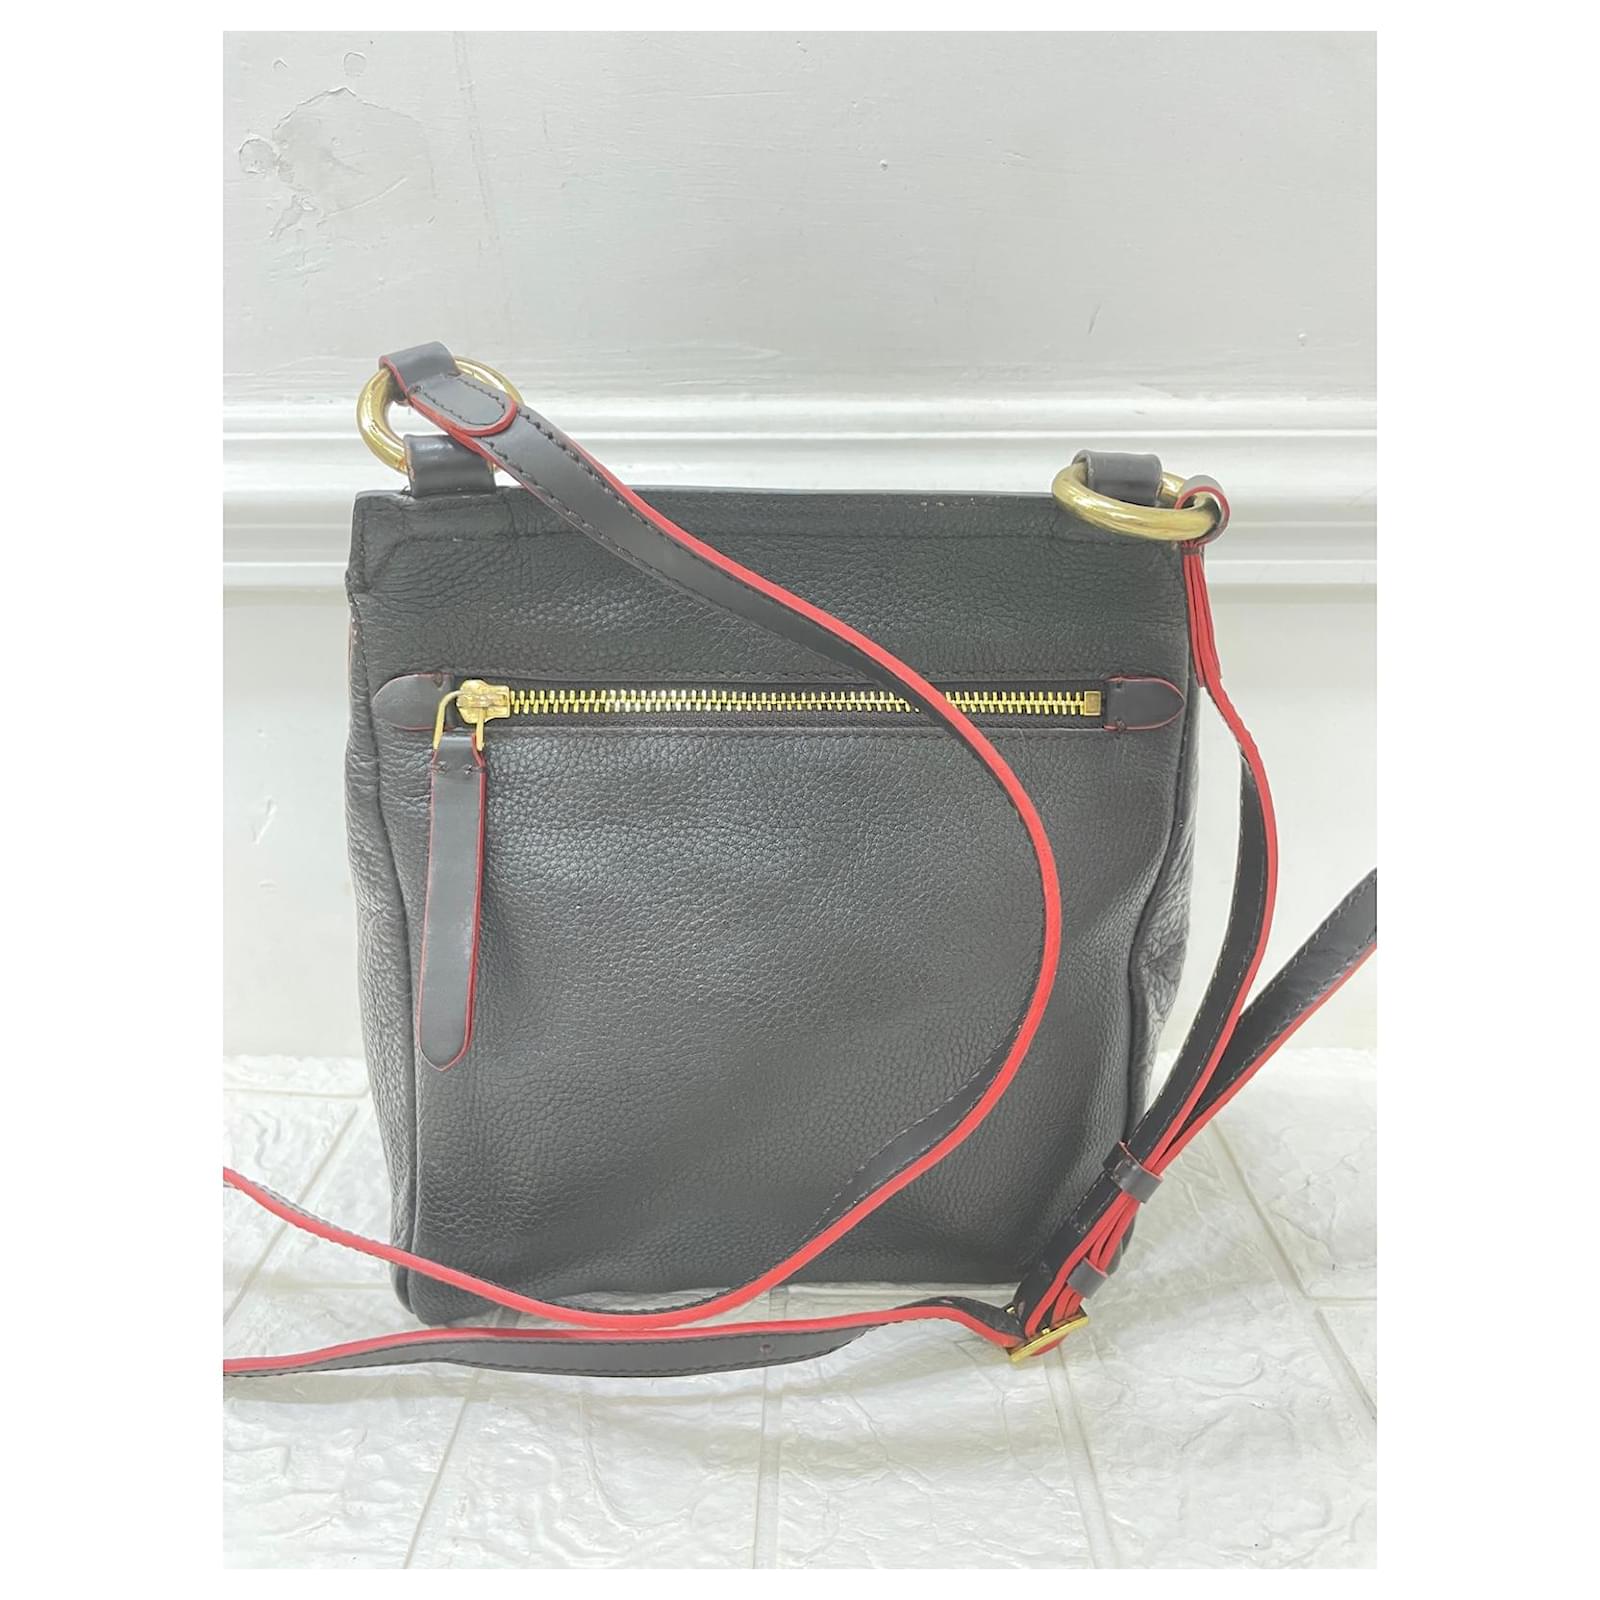 Burberry Bridle Small Soft Leather Crossbody Bag, Black